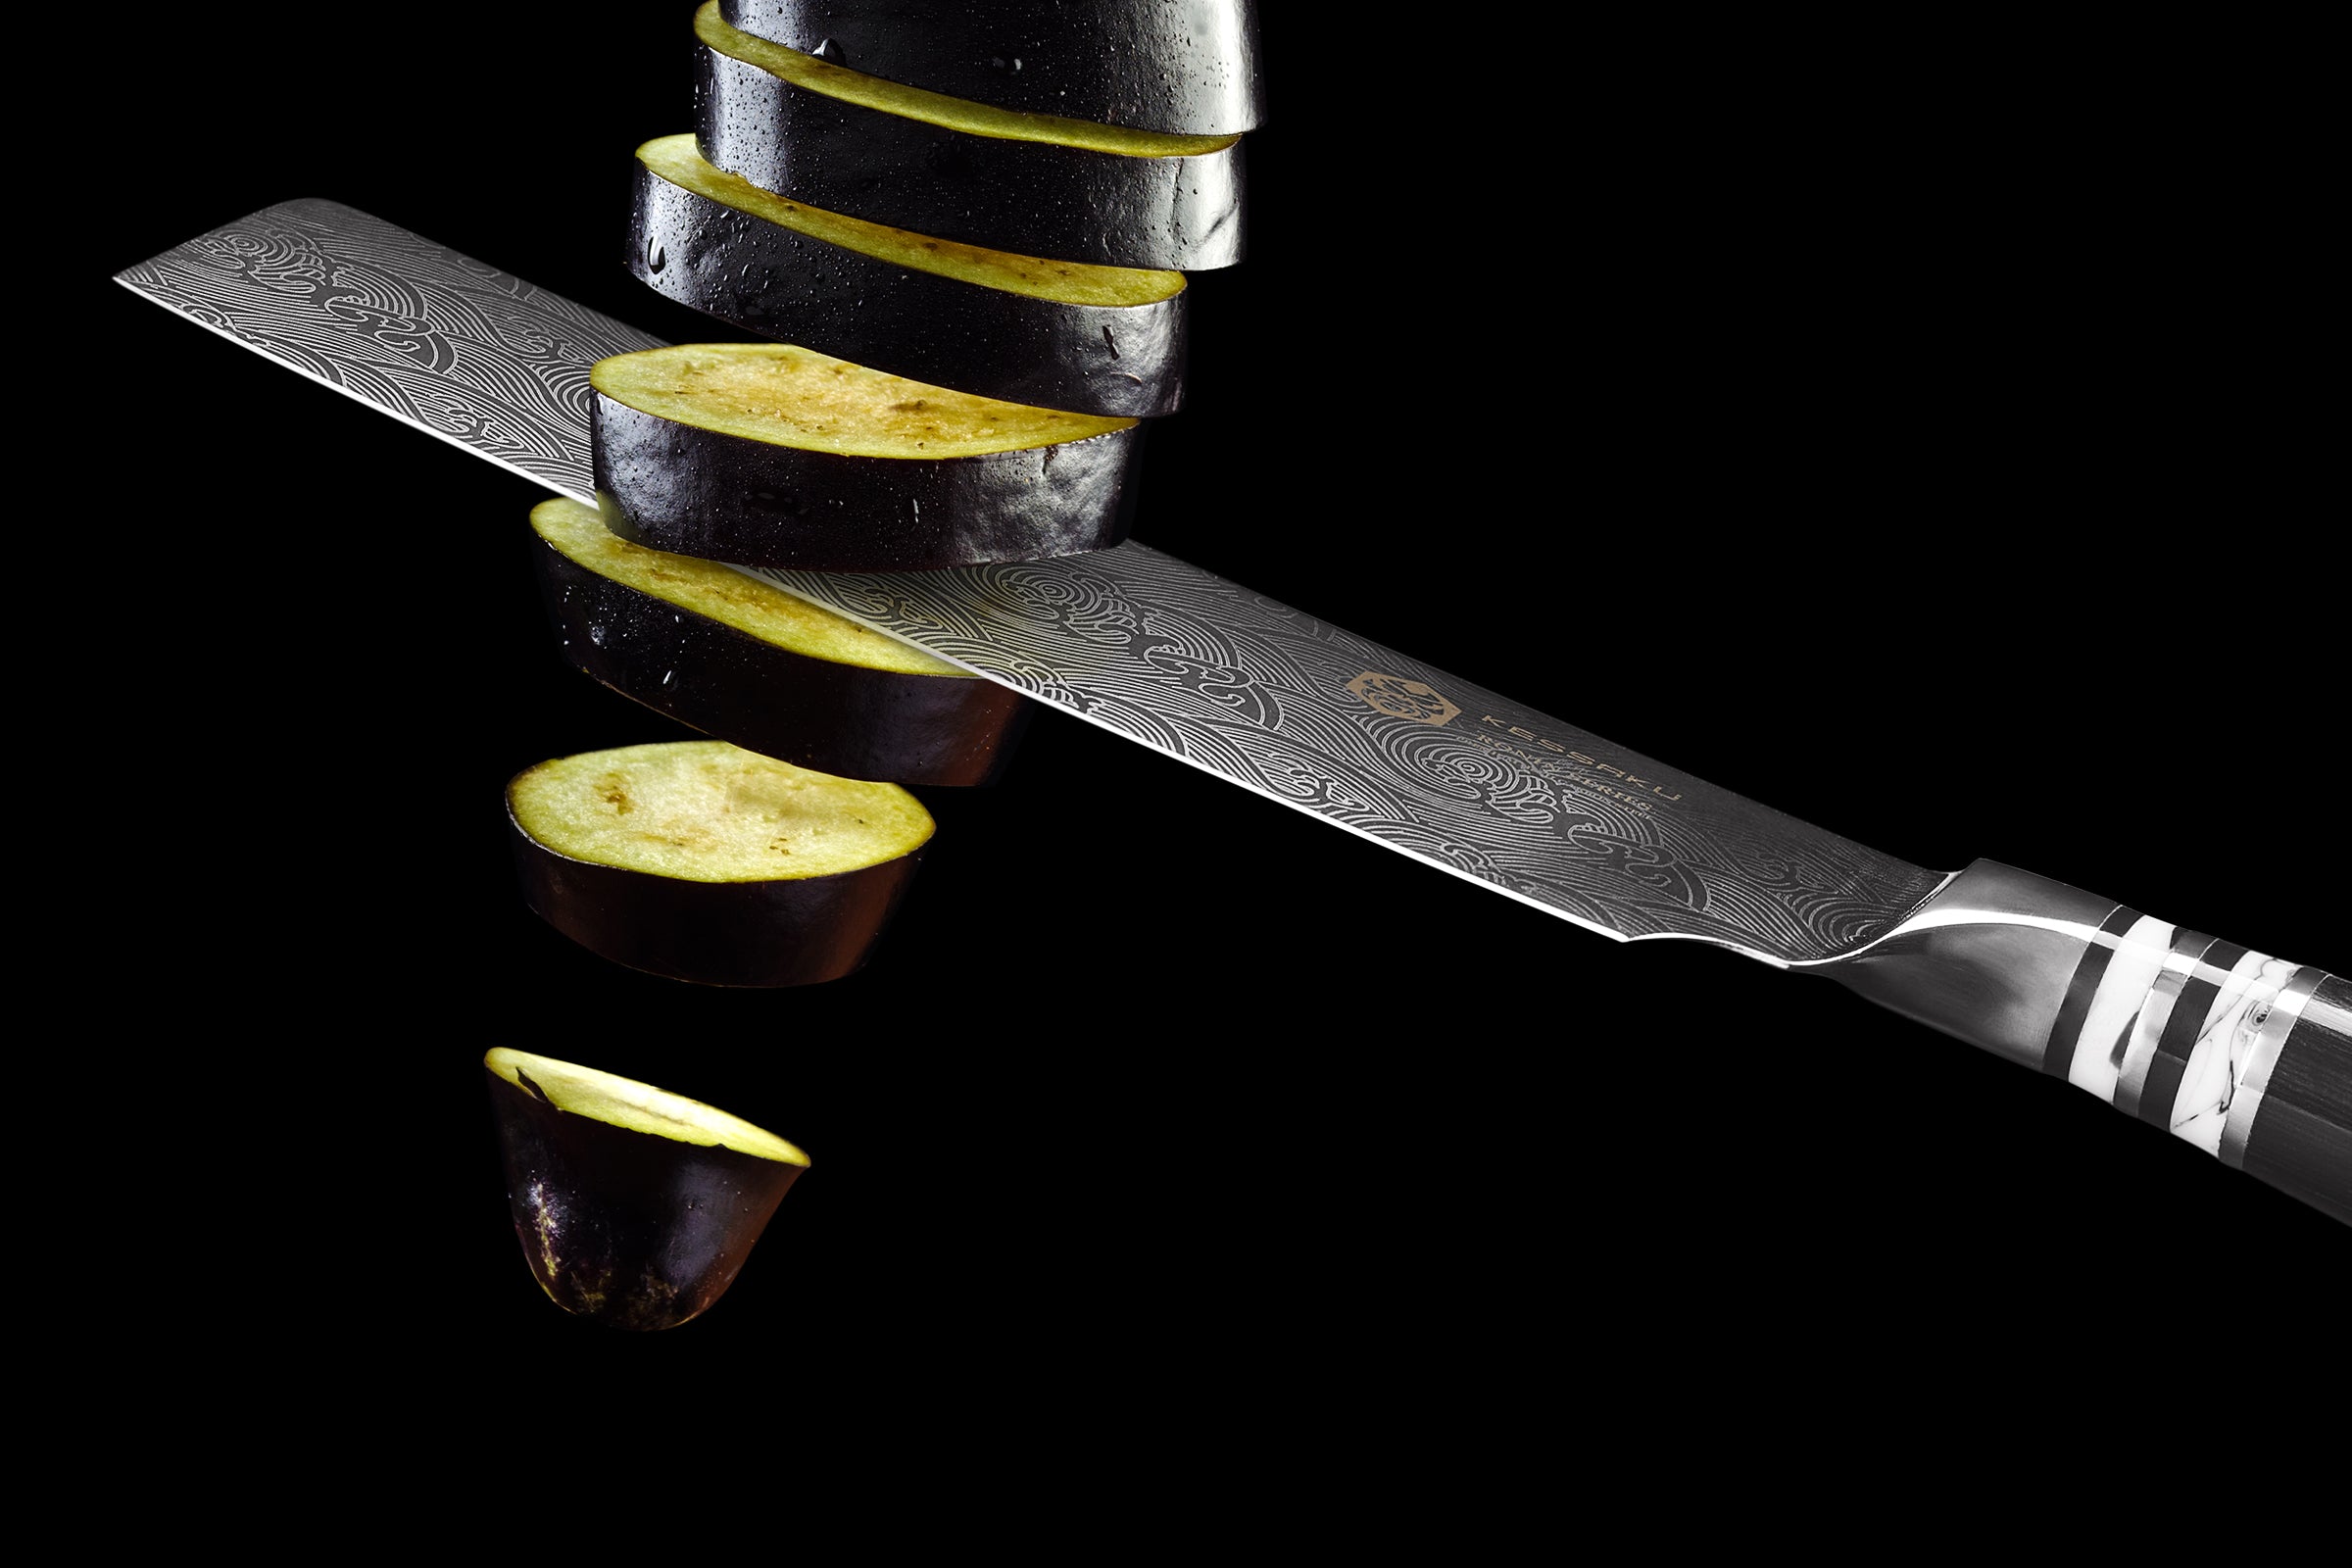 The Ronin Nakiri slicing eggplant